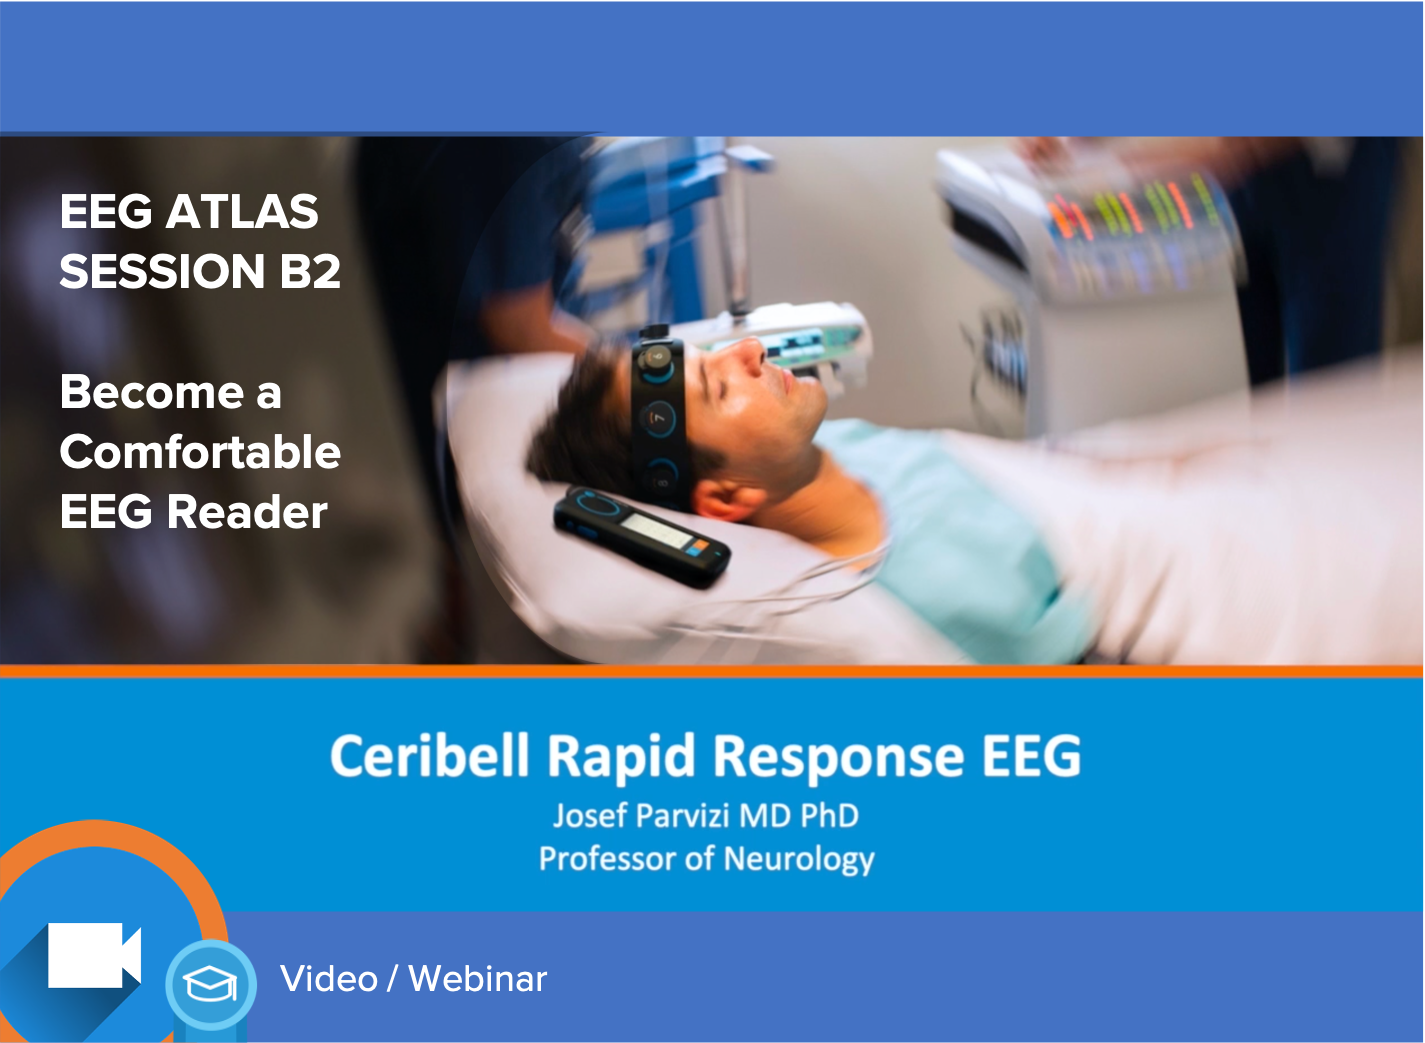 EEG Atlas B2: Become a Comfortable EEG Reader Using The Ceribell Rapid Response System